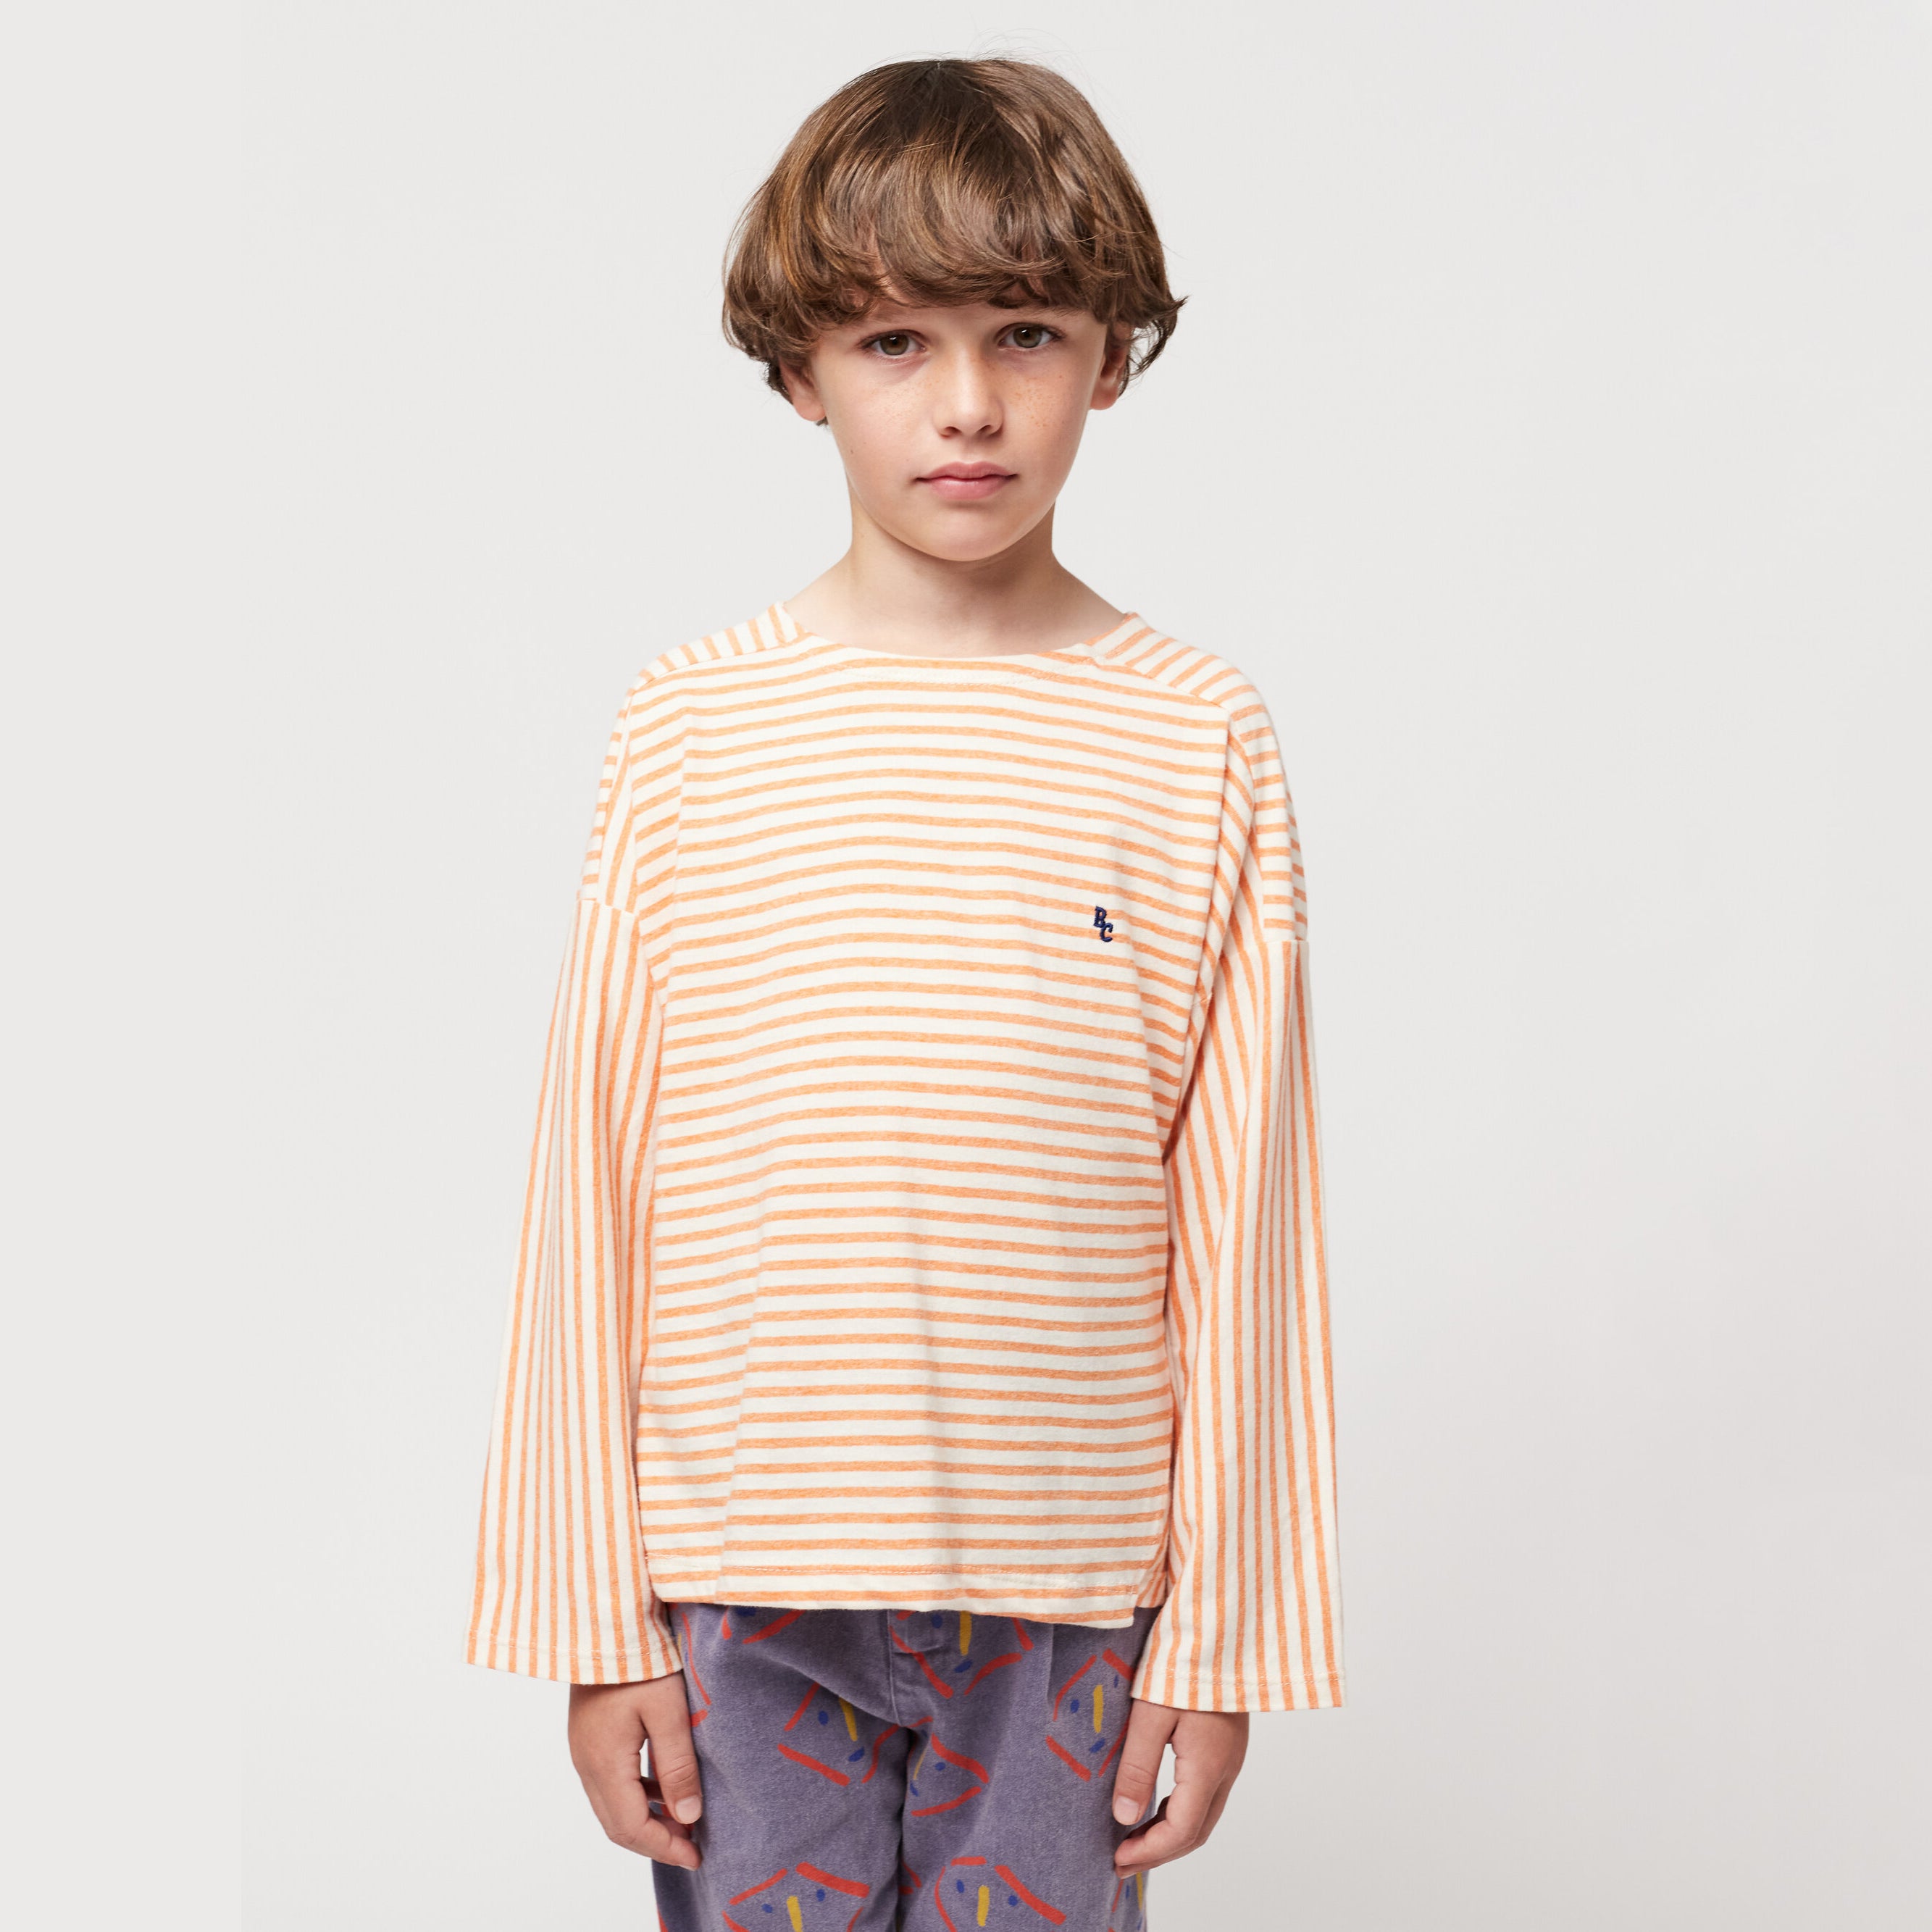 Boys & Girls Orange Stripes Cotton T-Shirt